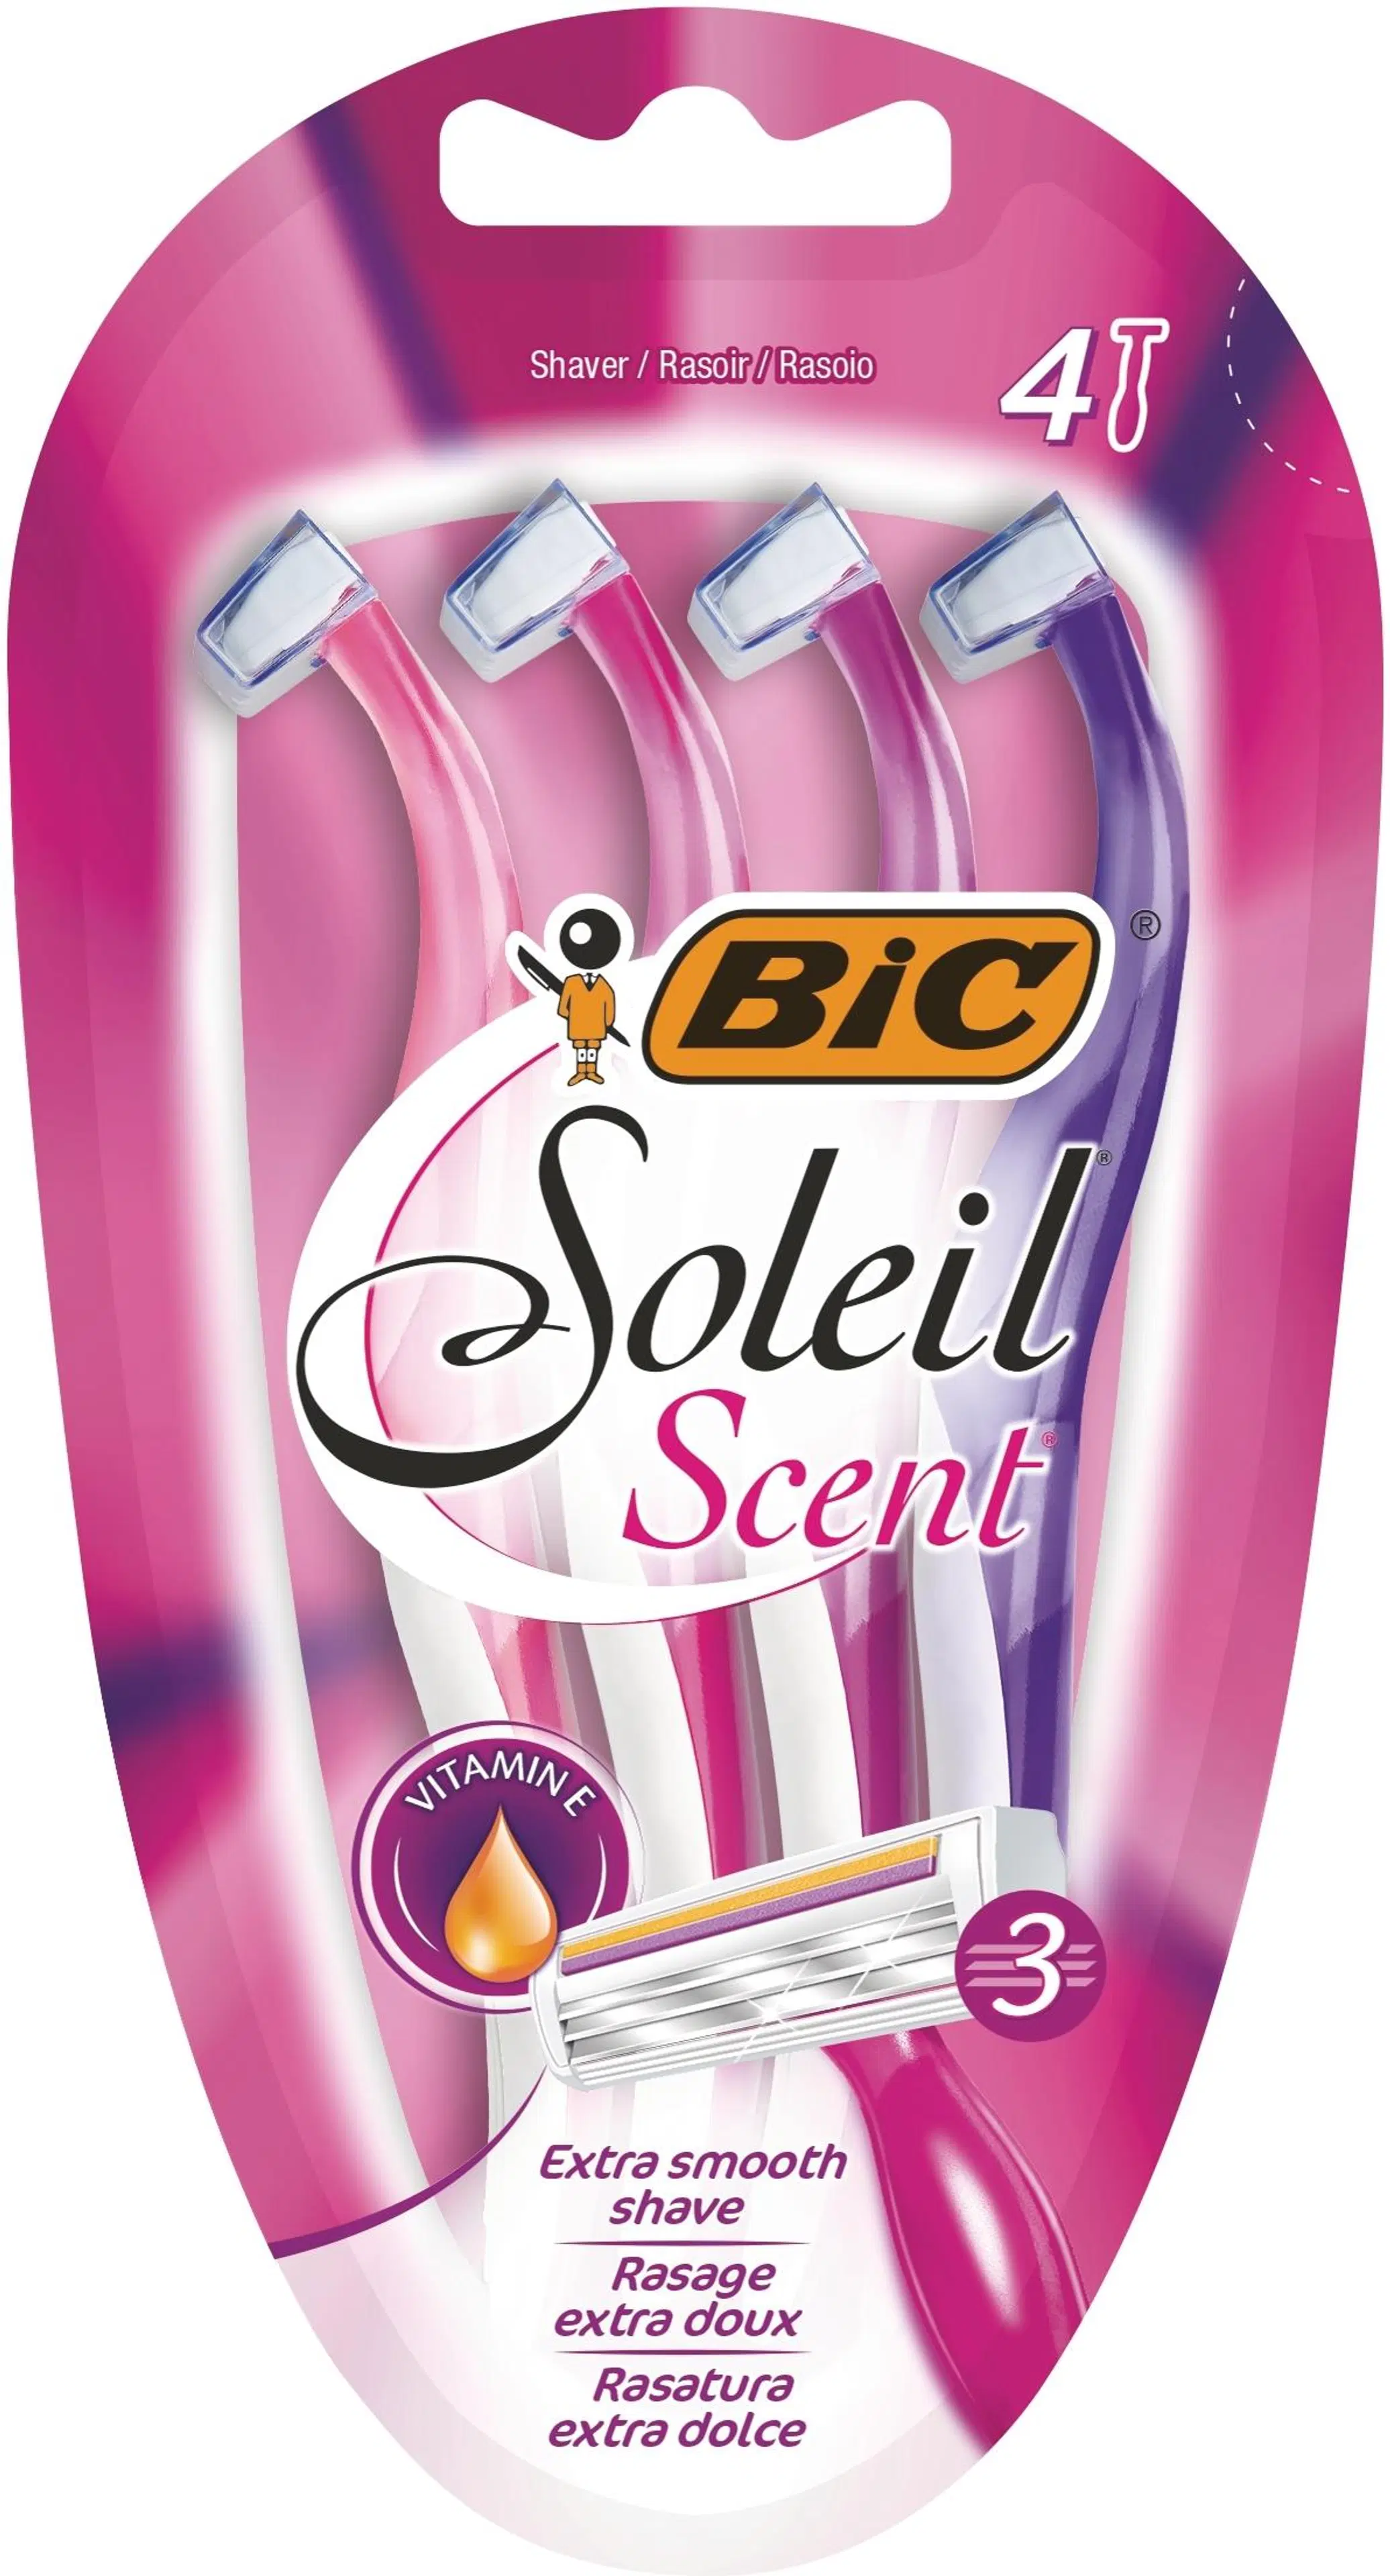 BIC varsiterä Soleil Scent 4-pack